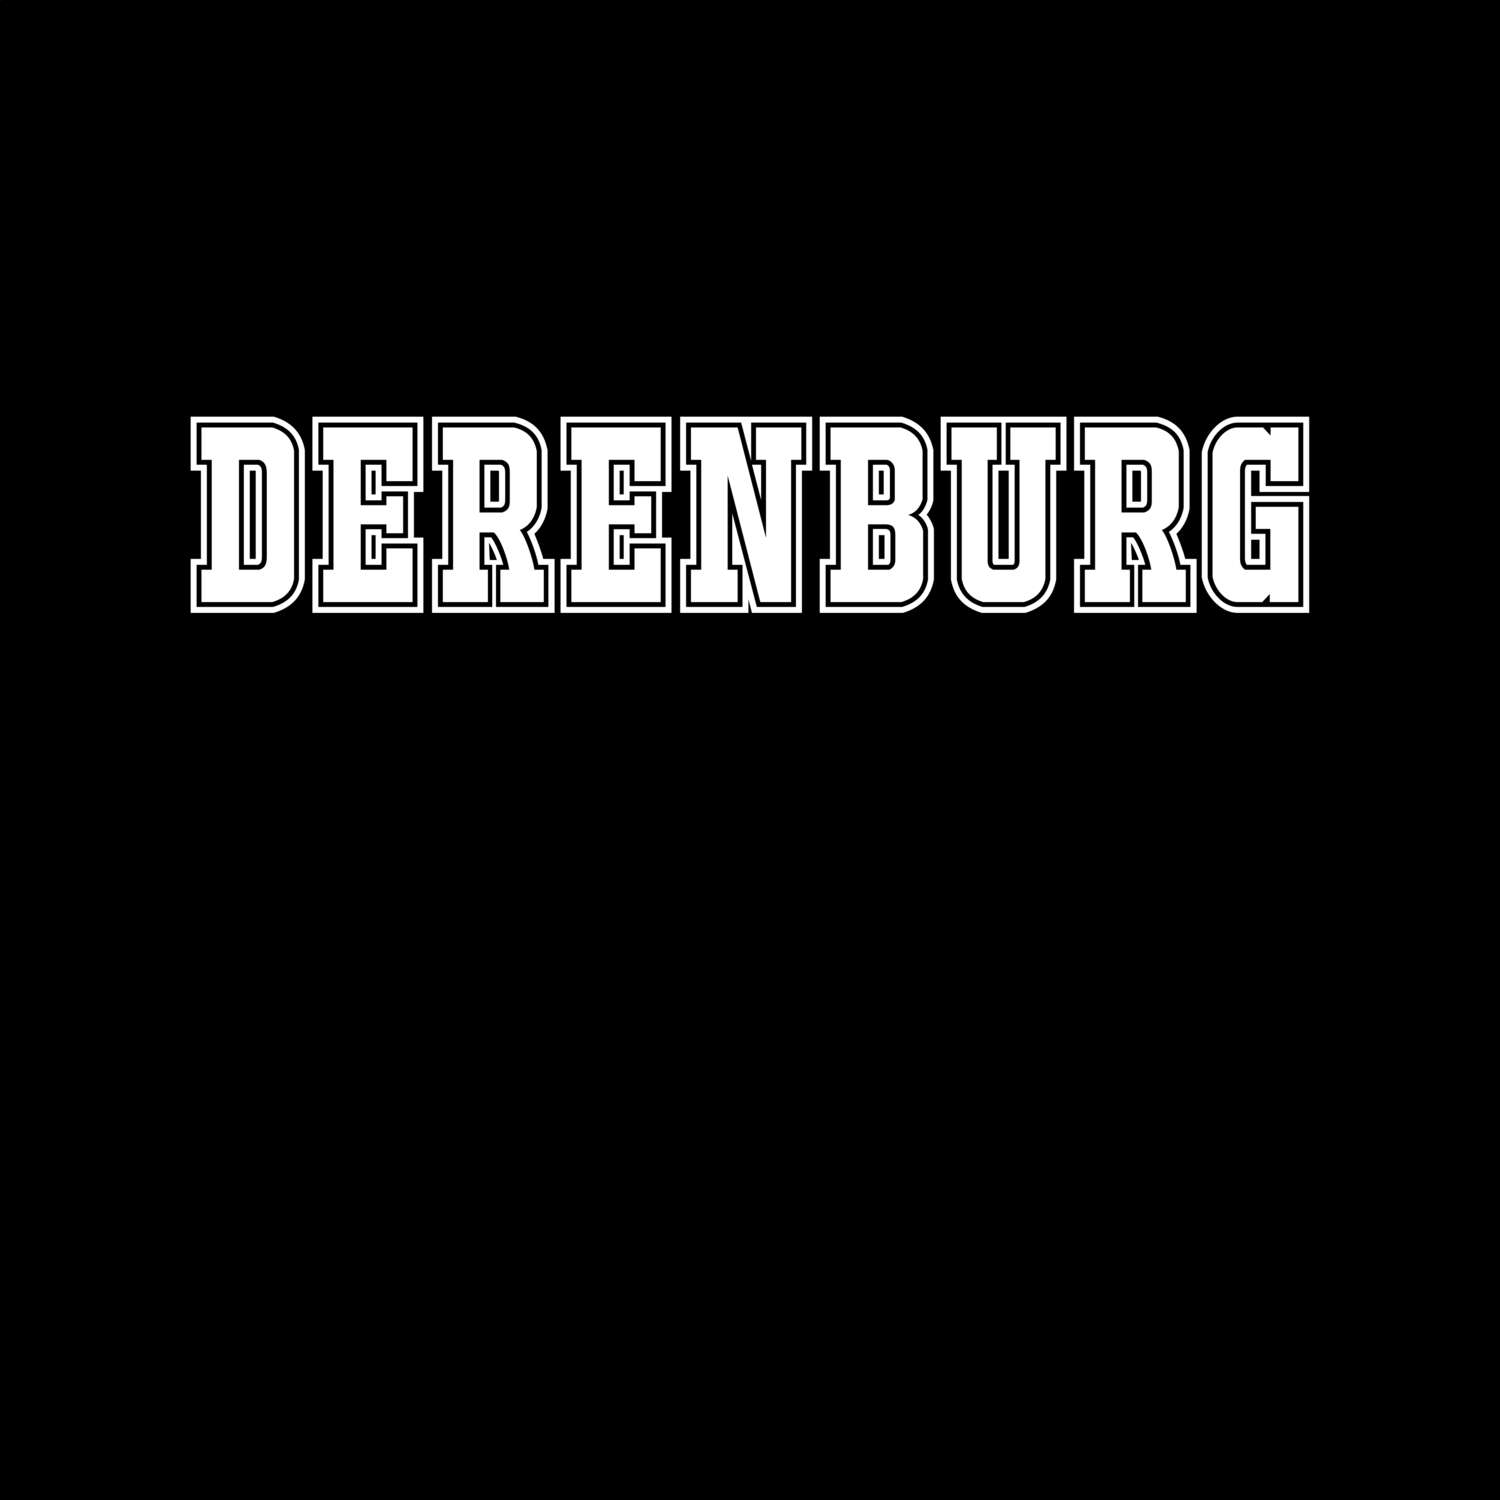 Derenburg T-Shirt »Classic«